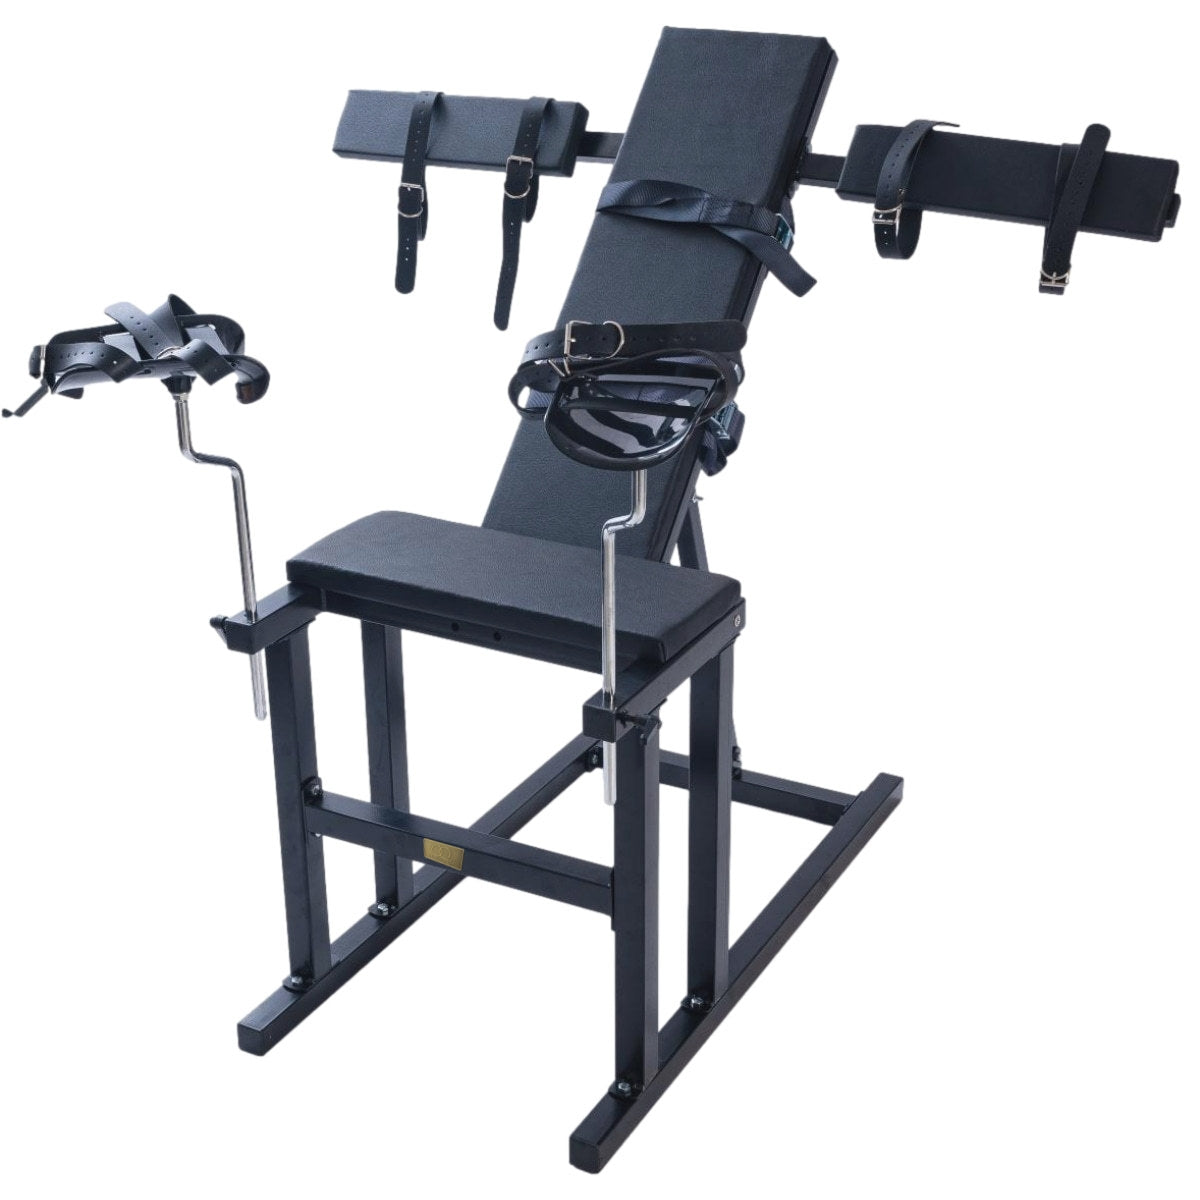 Roomsacred Gyno Chair Spanking Bench Adjustable Arm Splints & Wide Leg Stirrups BDSM Restraint Adult Bedroom Play Furniture